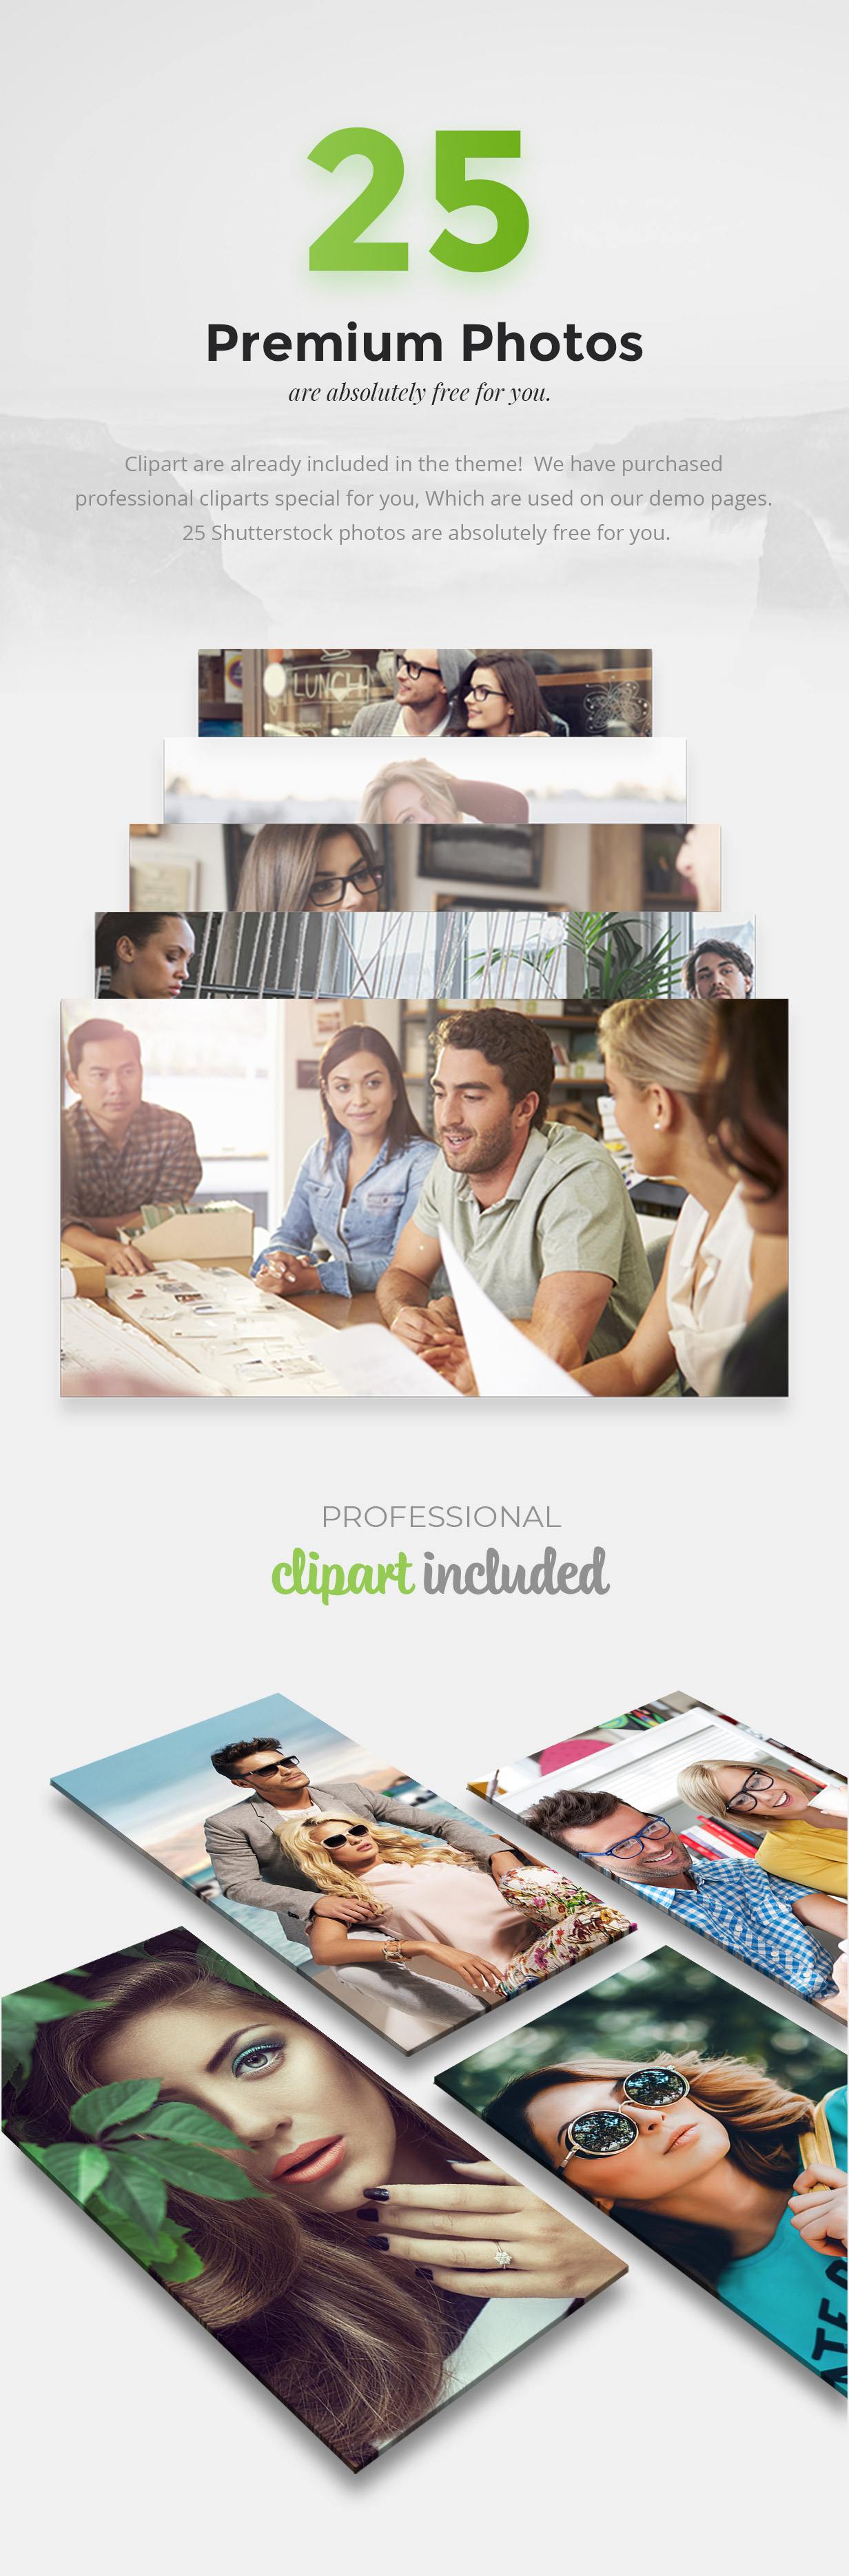 clipart included - Crane - Responsive Multipurpose WordPress Theme